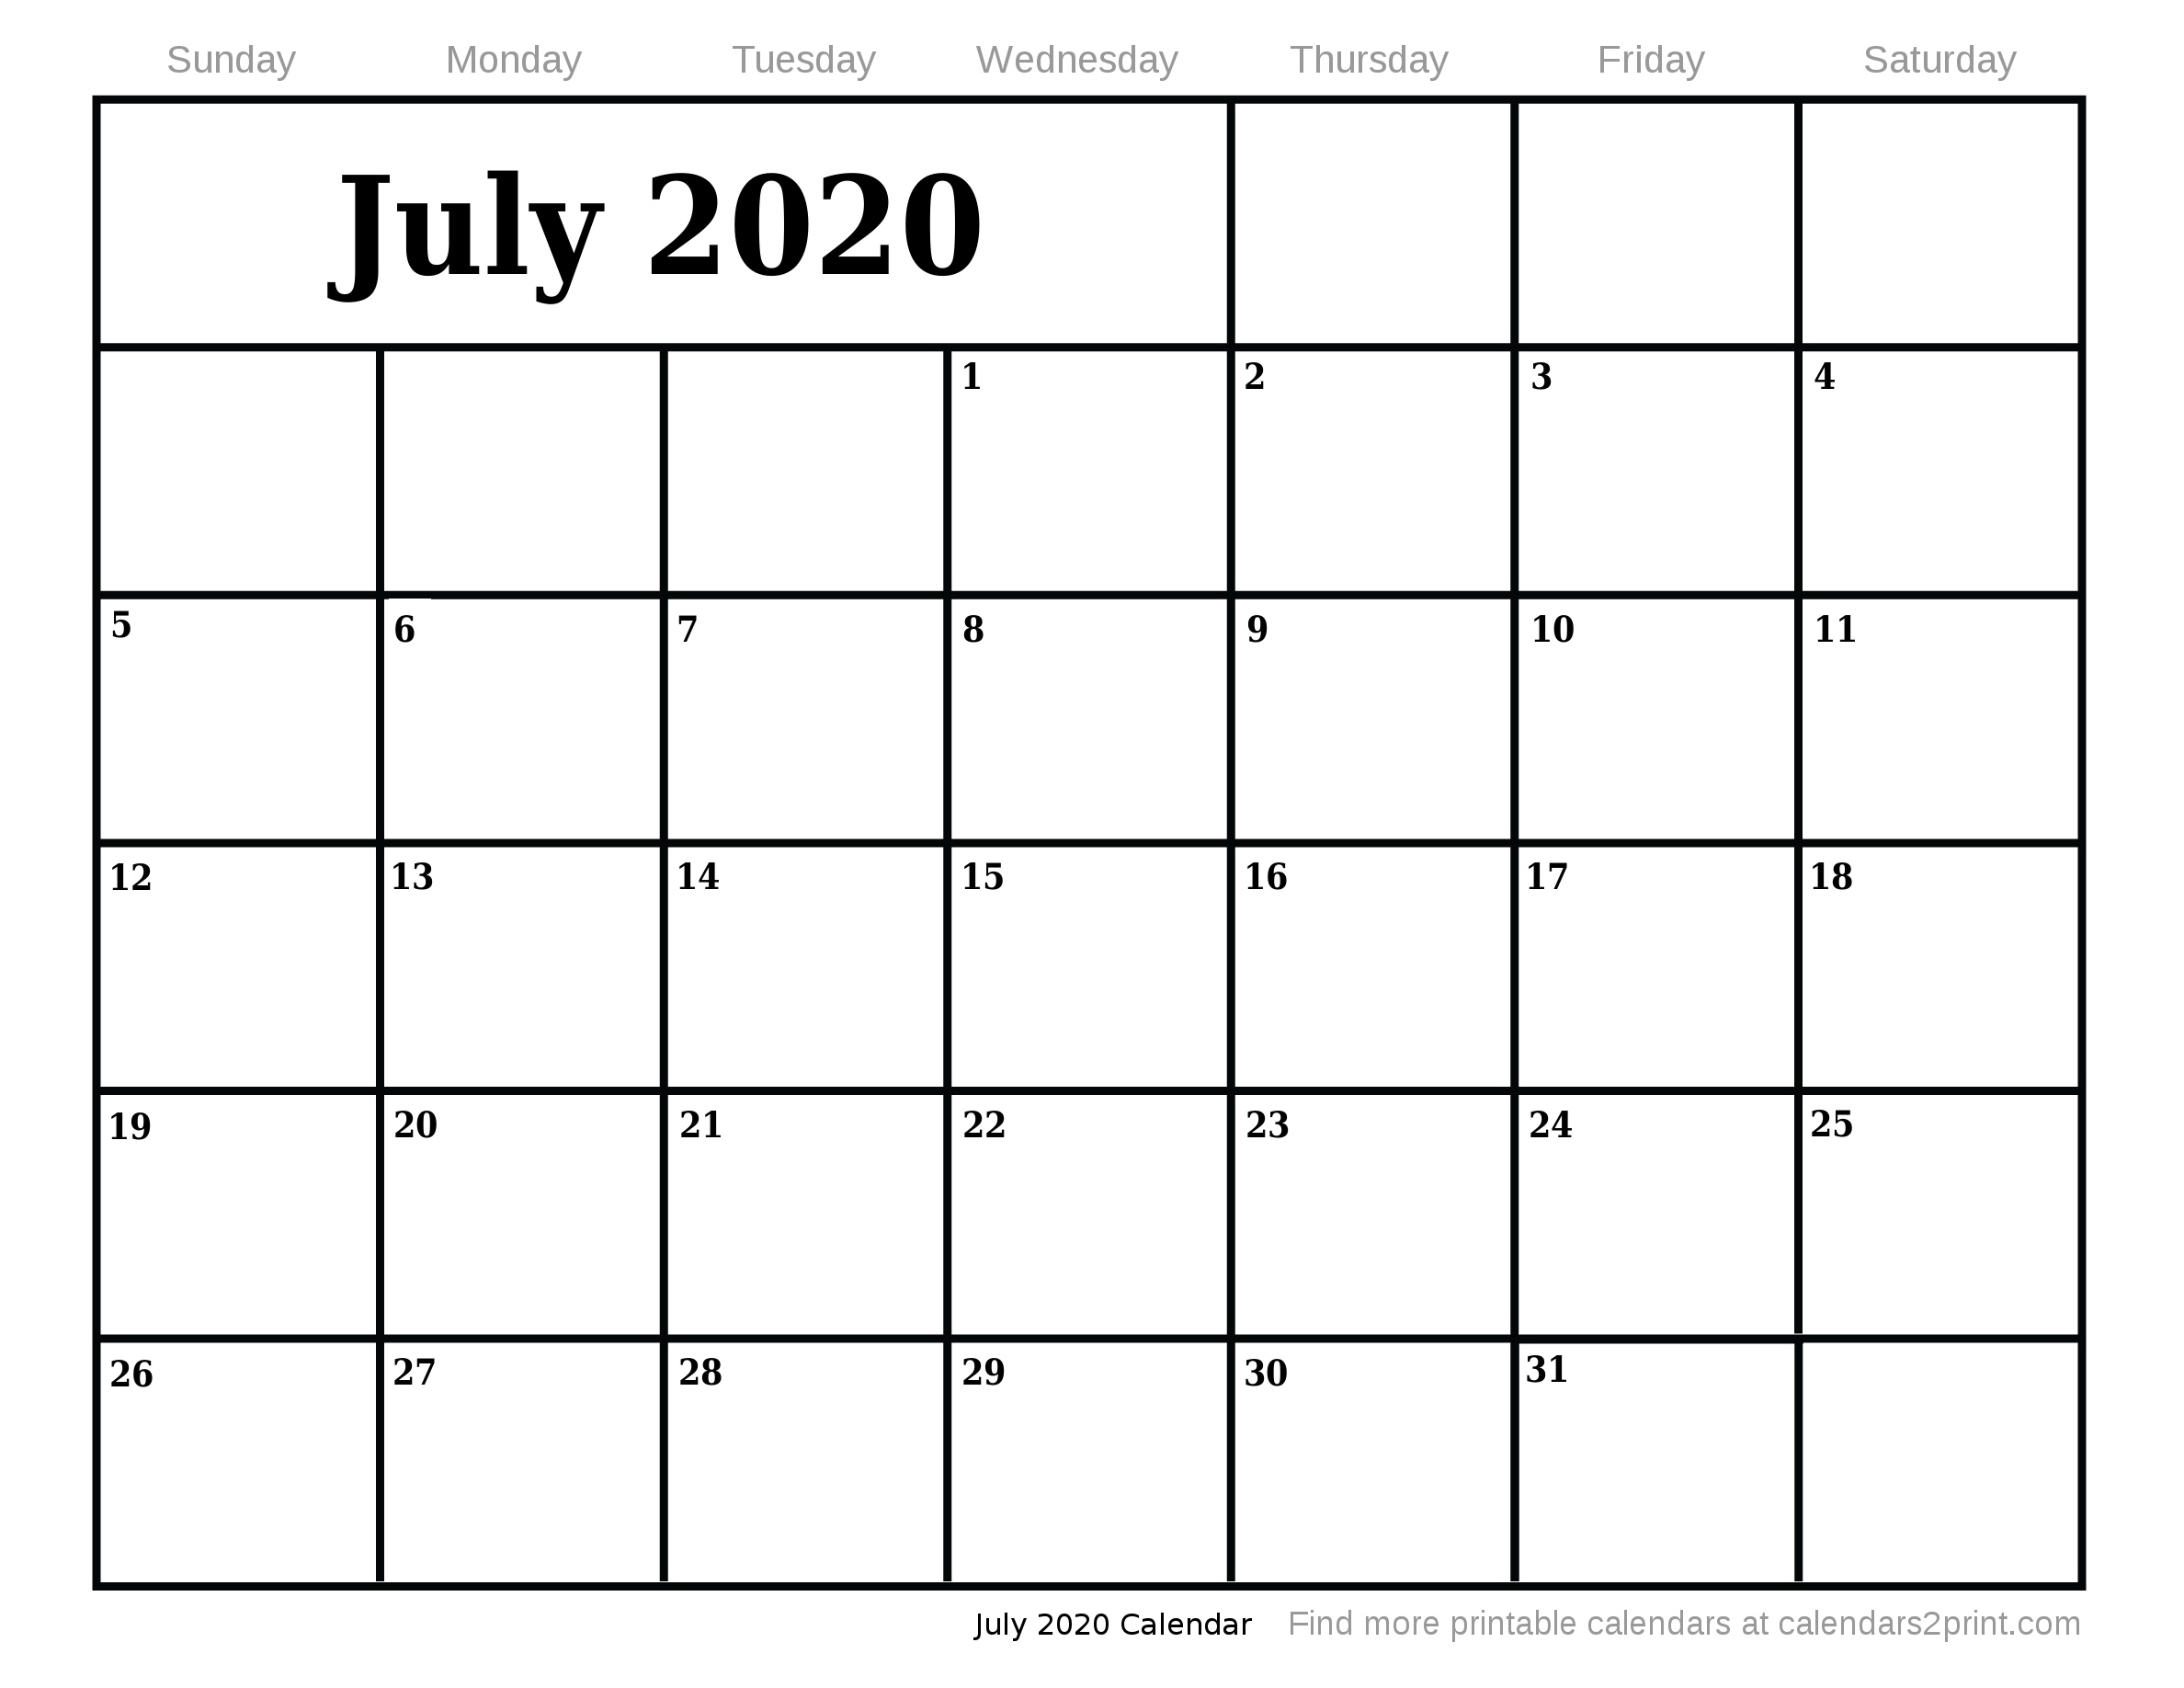 Jul 2020 Printable Calendar